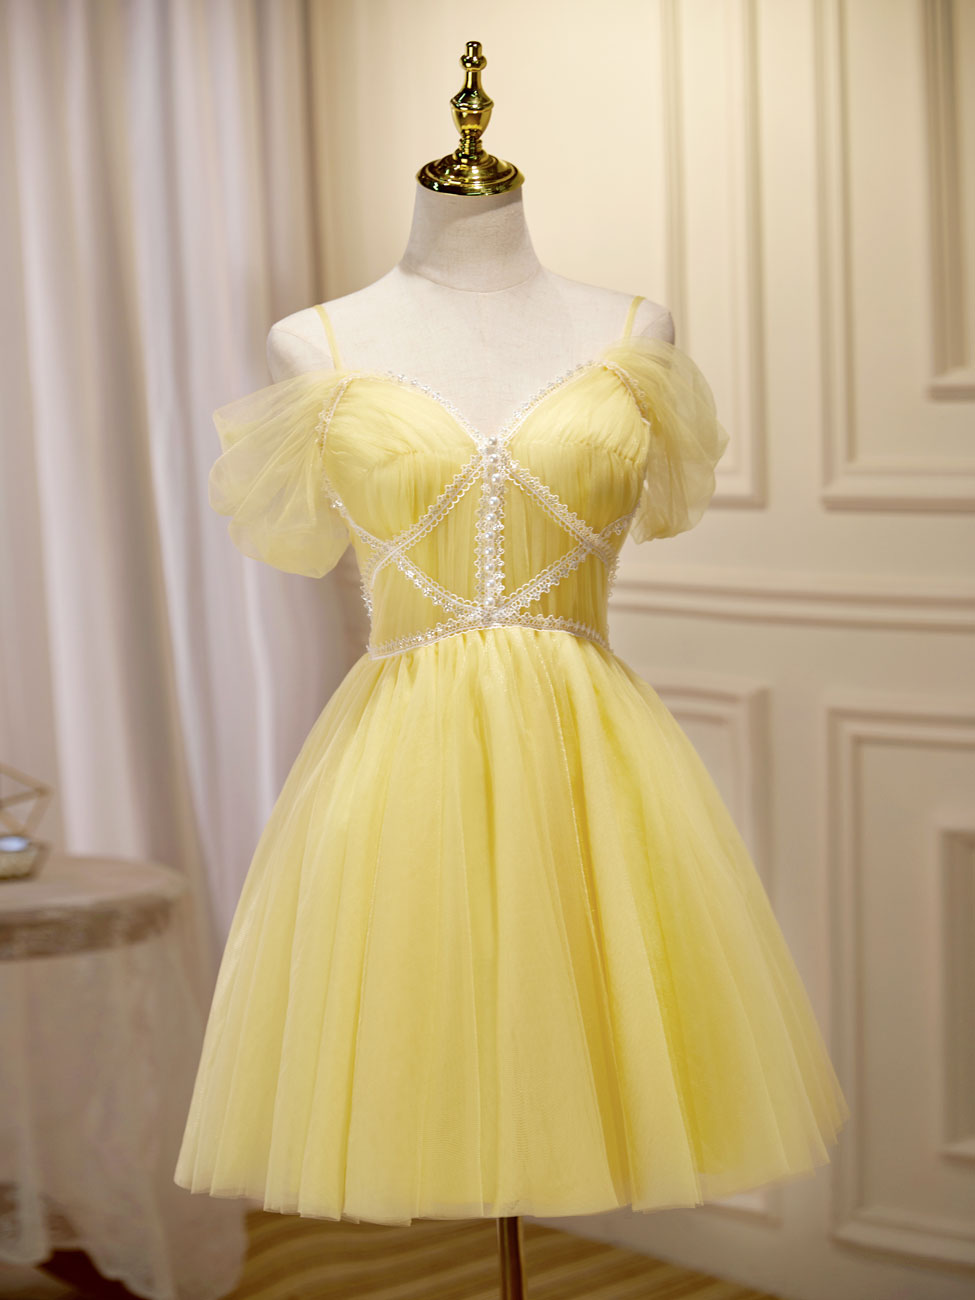 shopluu Mini/Short Yellow Prom Dresses, Yellow Cute Homecoming Dress with Beading Lace US 6 / Custom Color